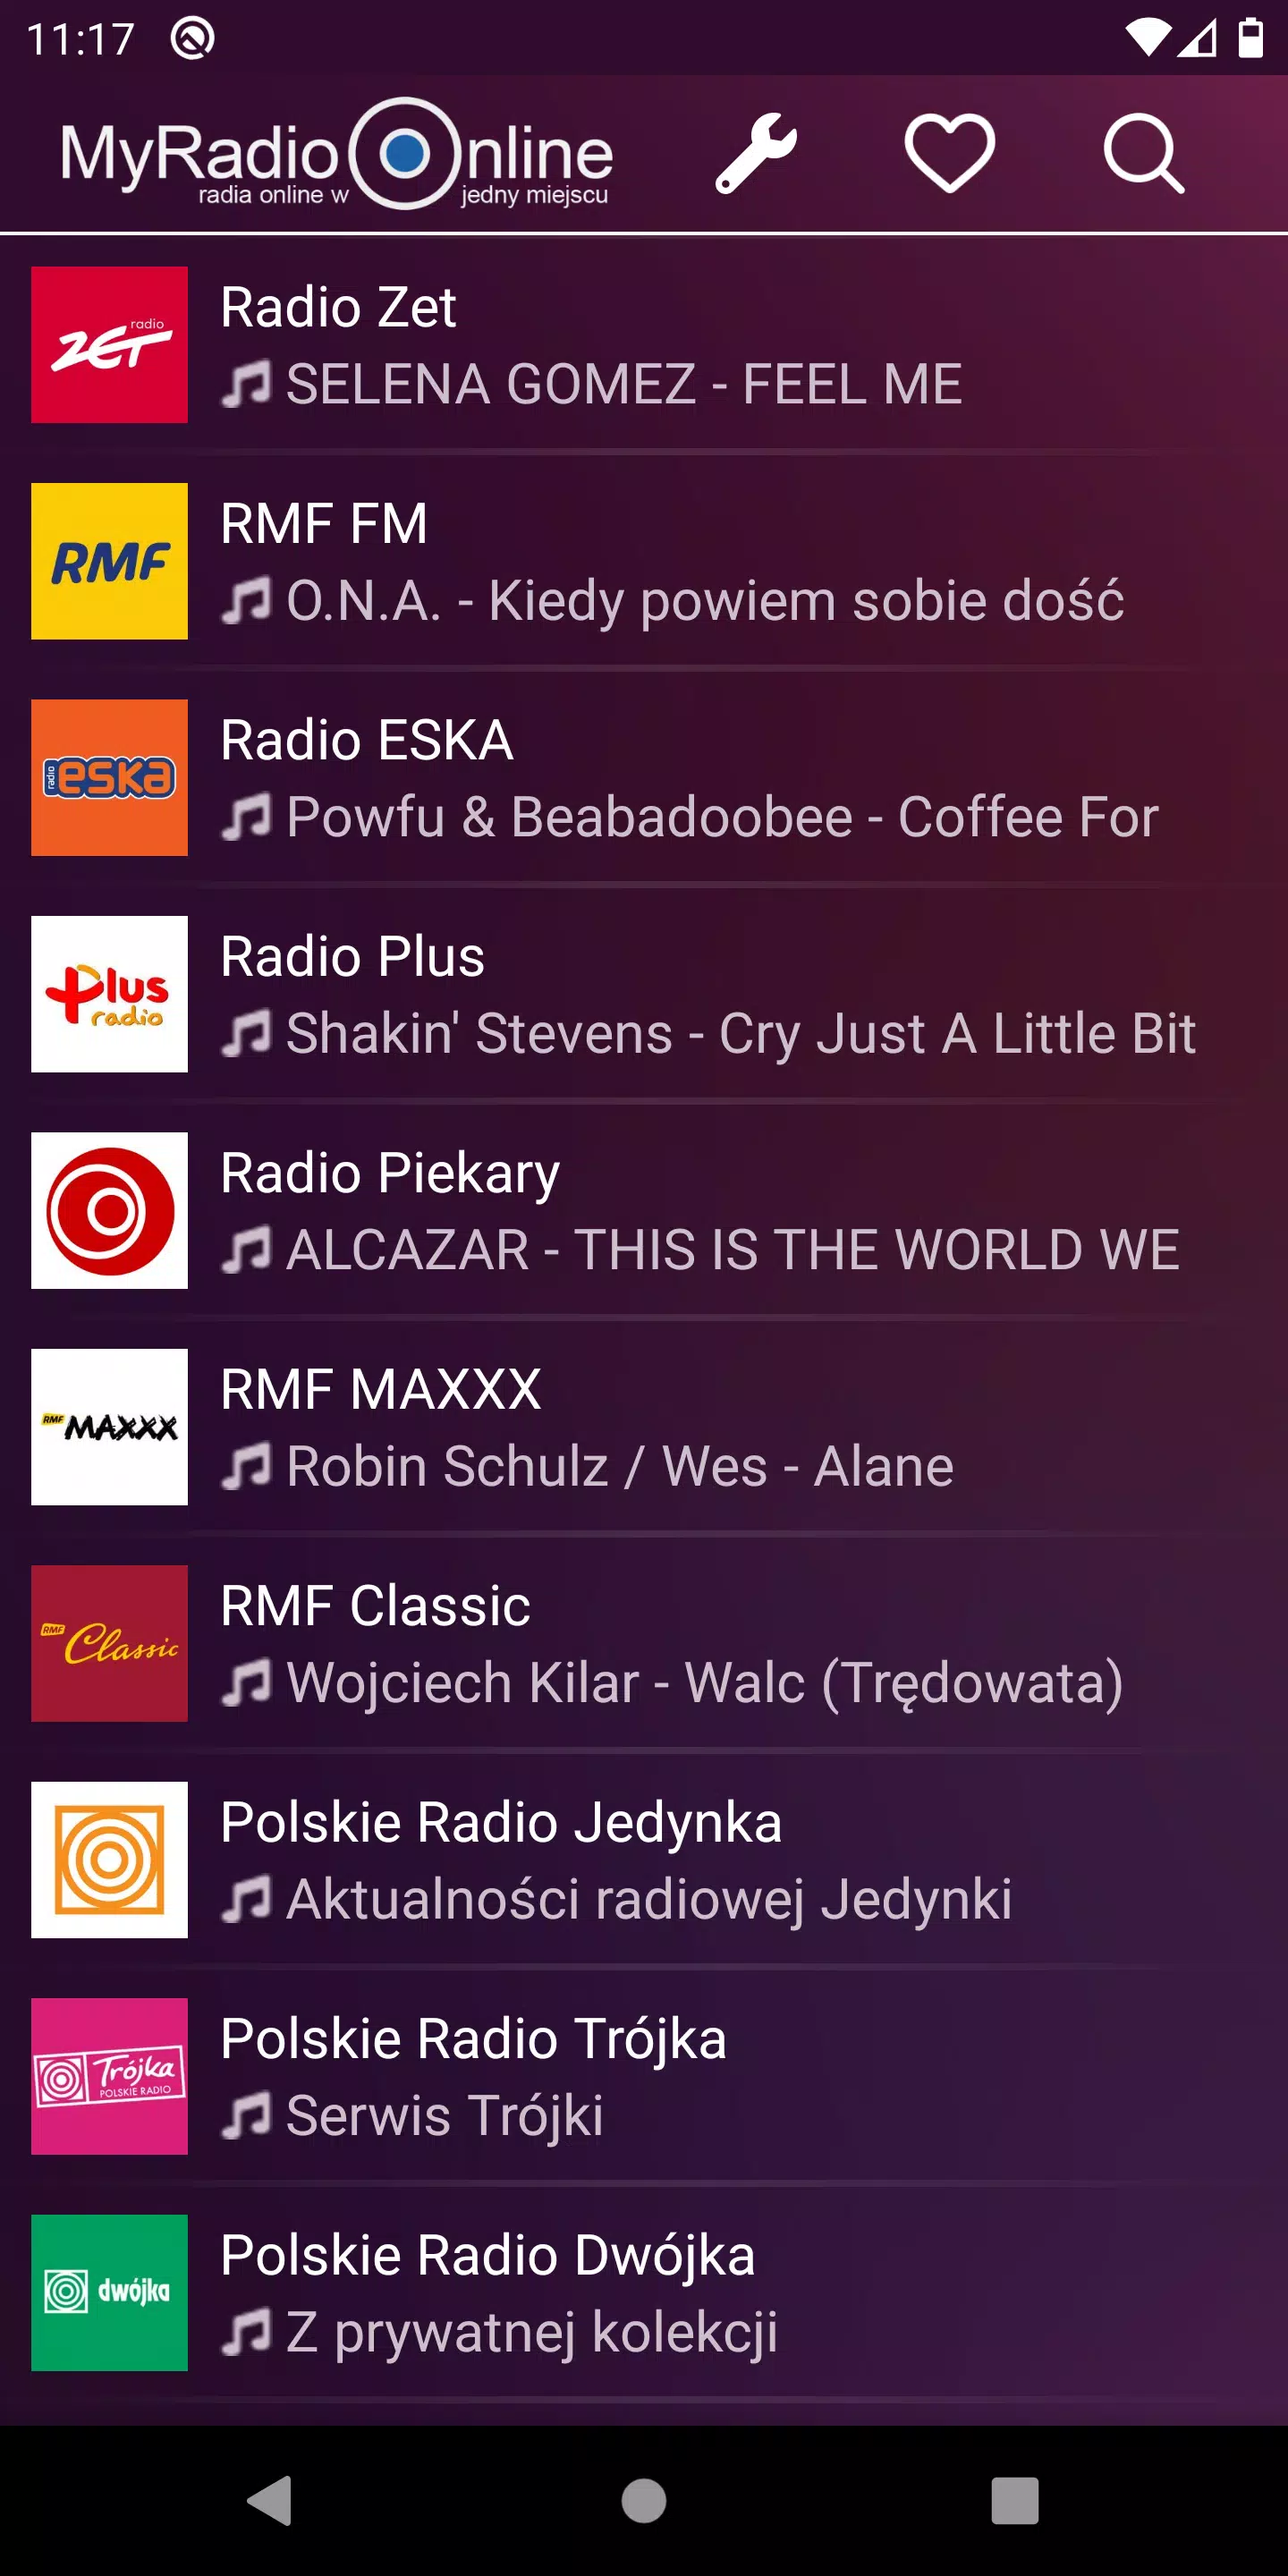 My Radio Online - PL - Polska APK for Android Download